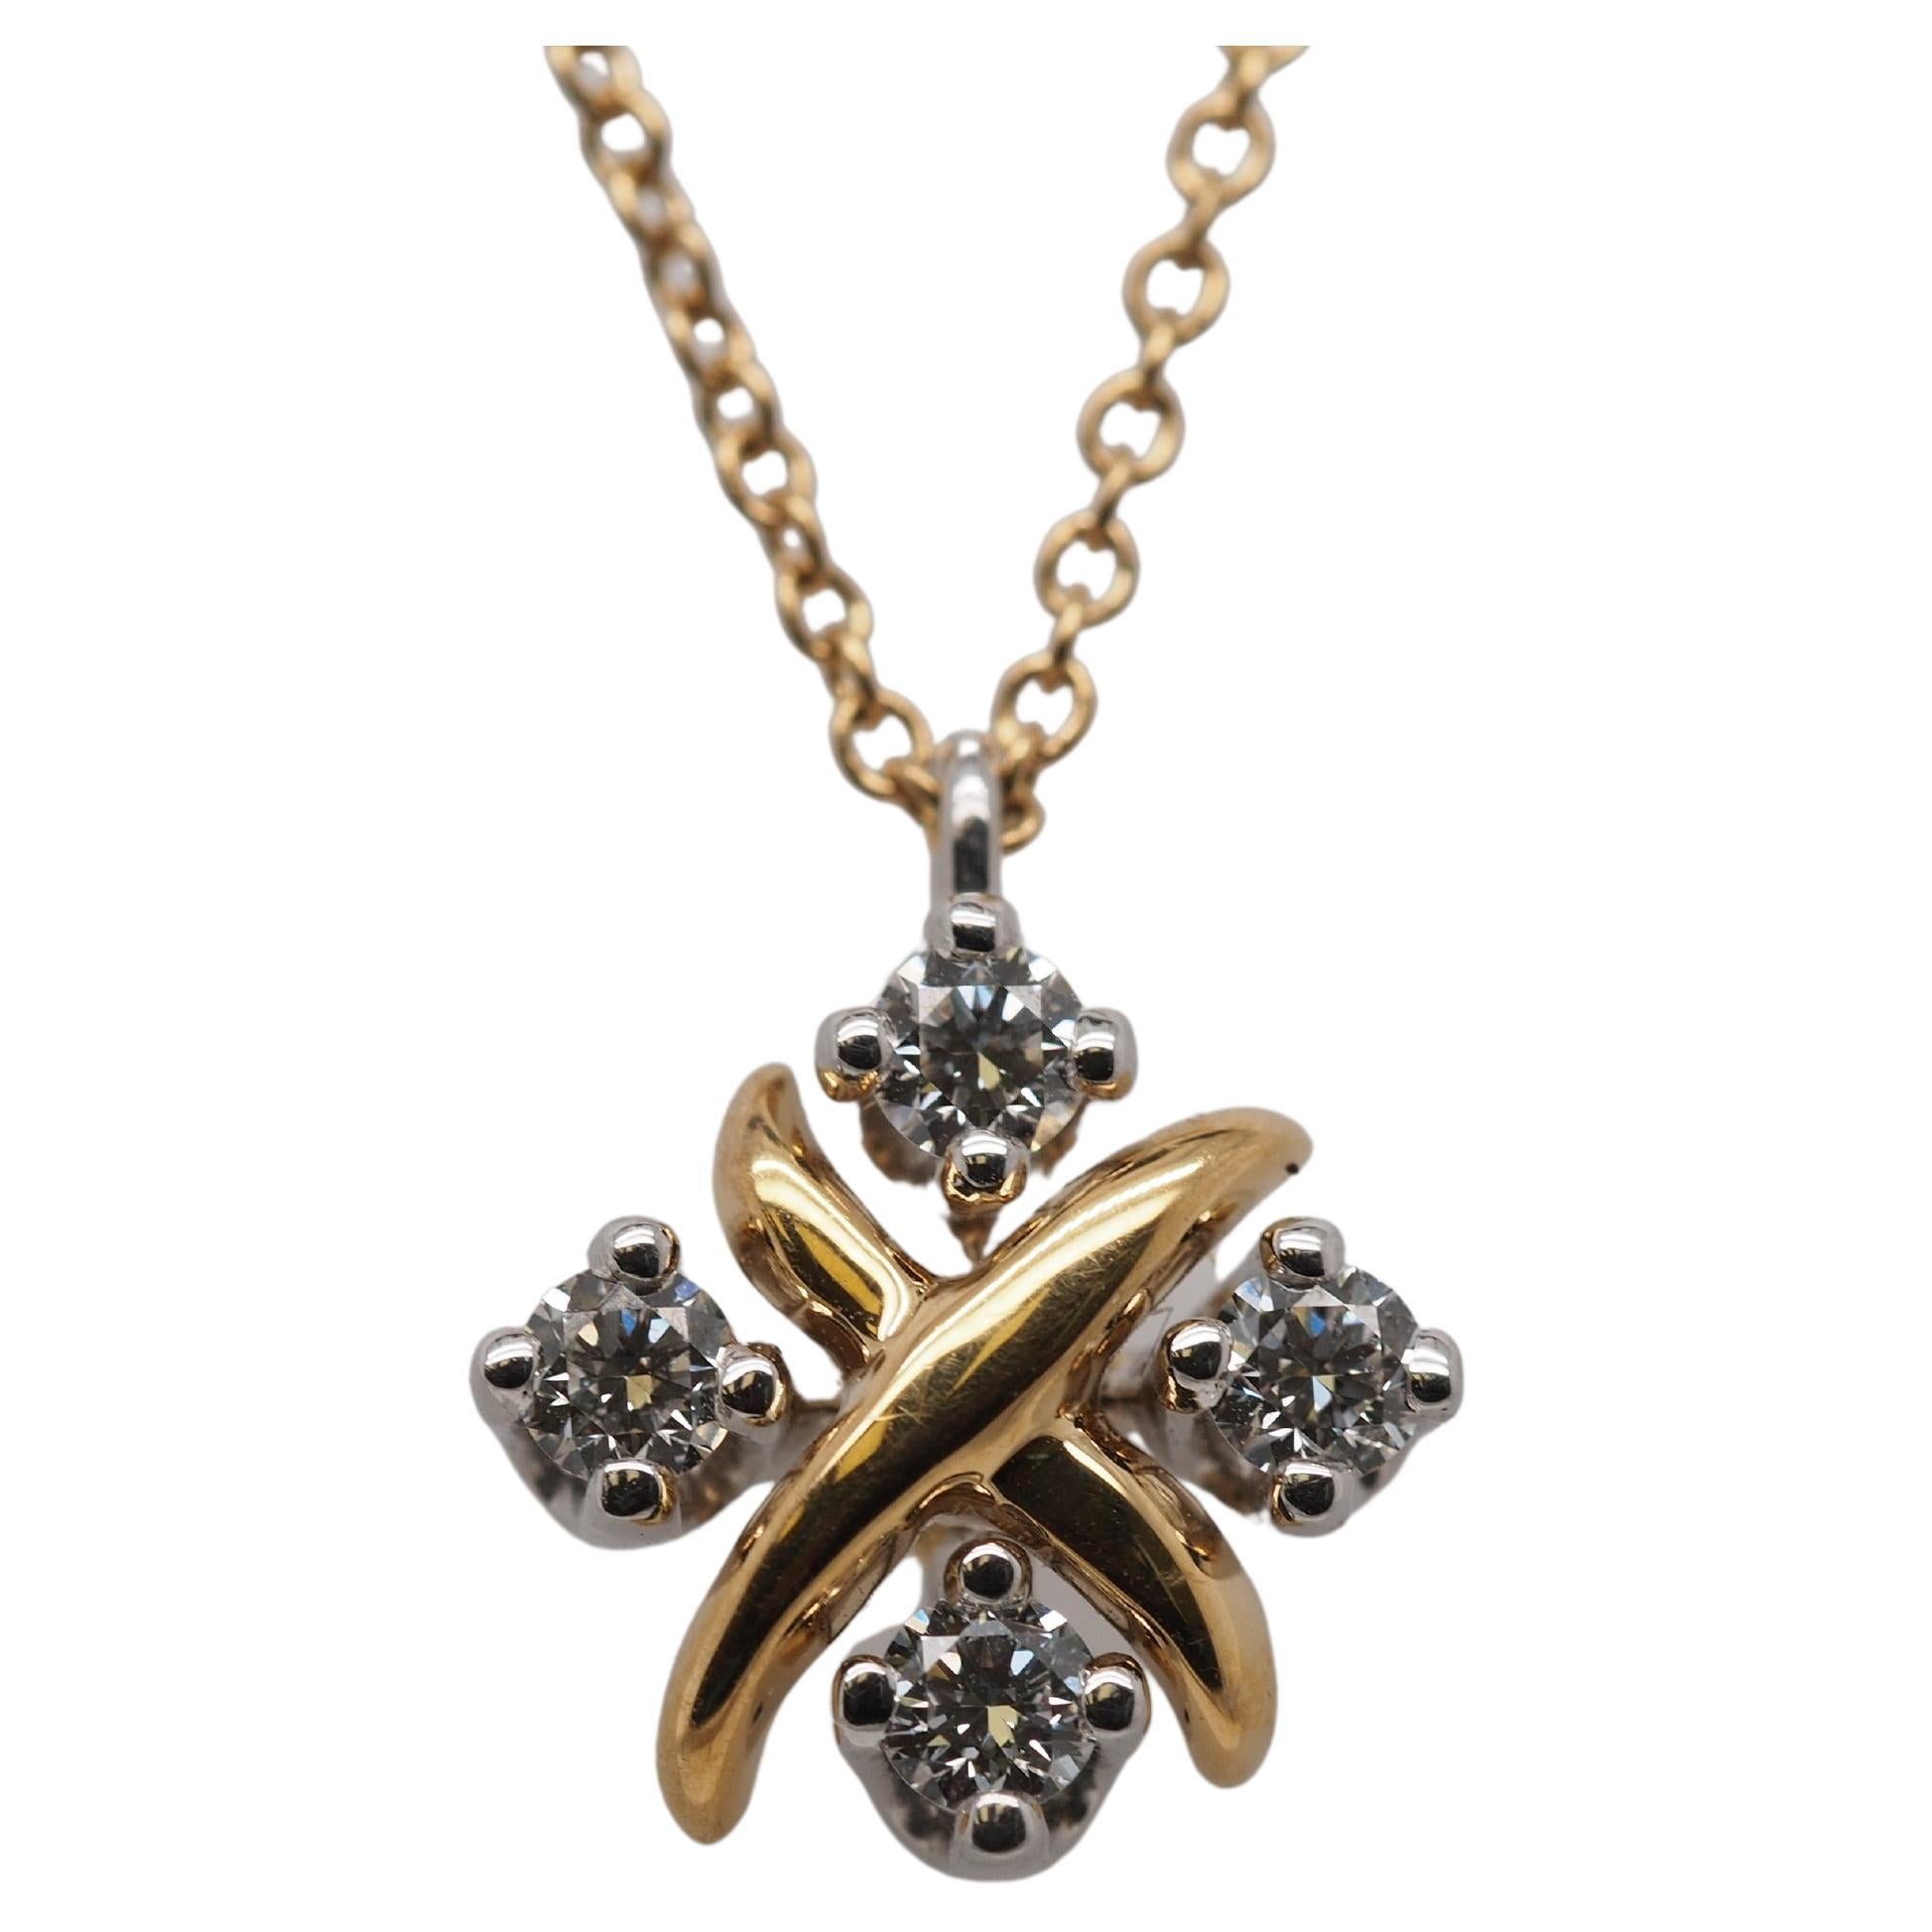 Tiffany & Co. Lynn Diamond Pendant 18k Yellow Gold and Platinum